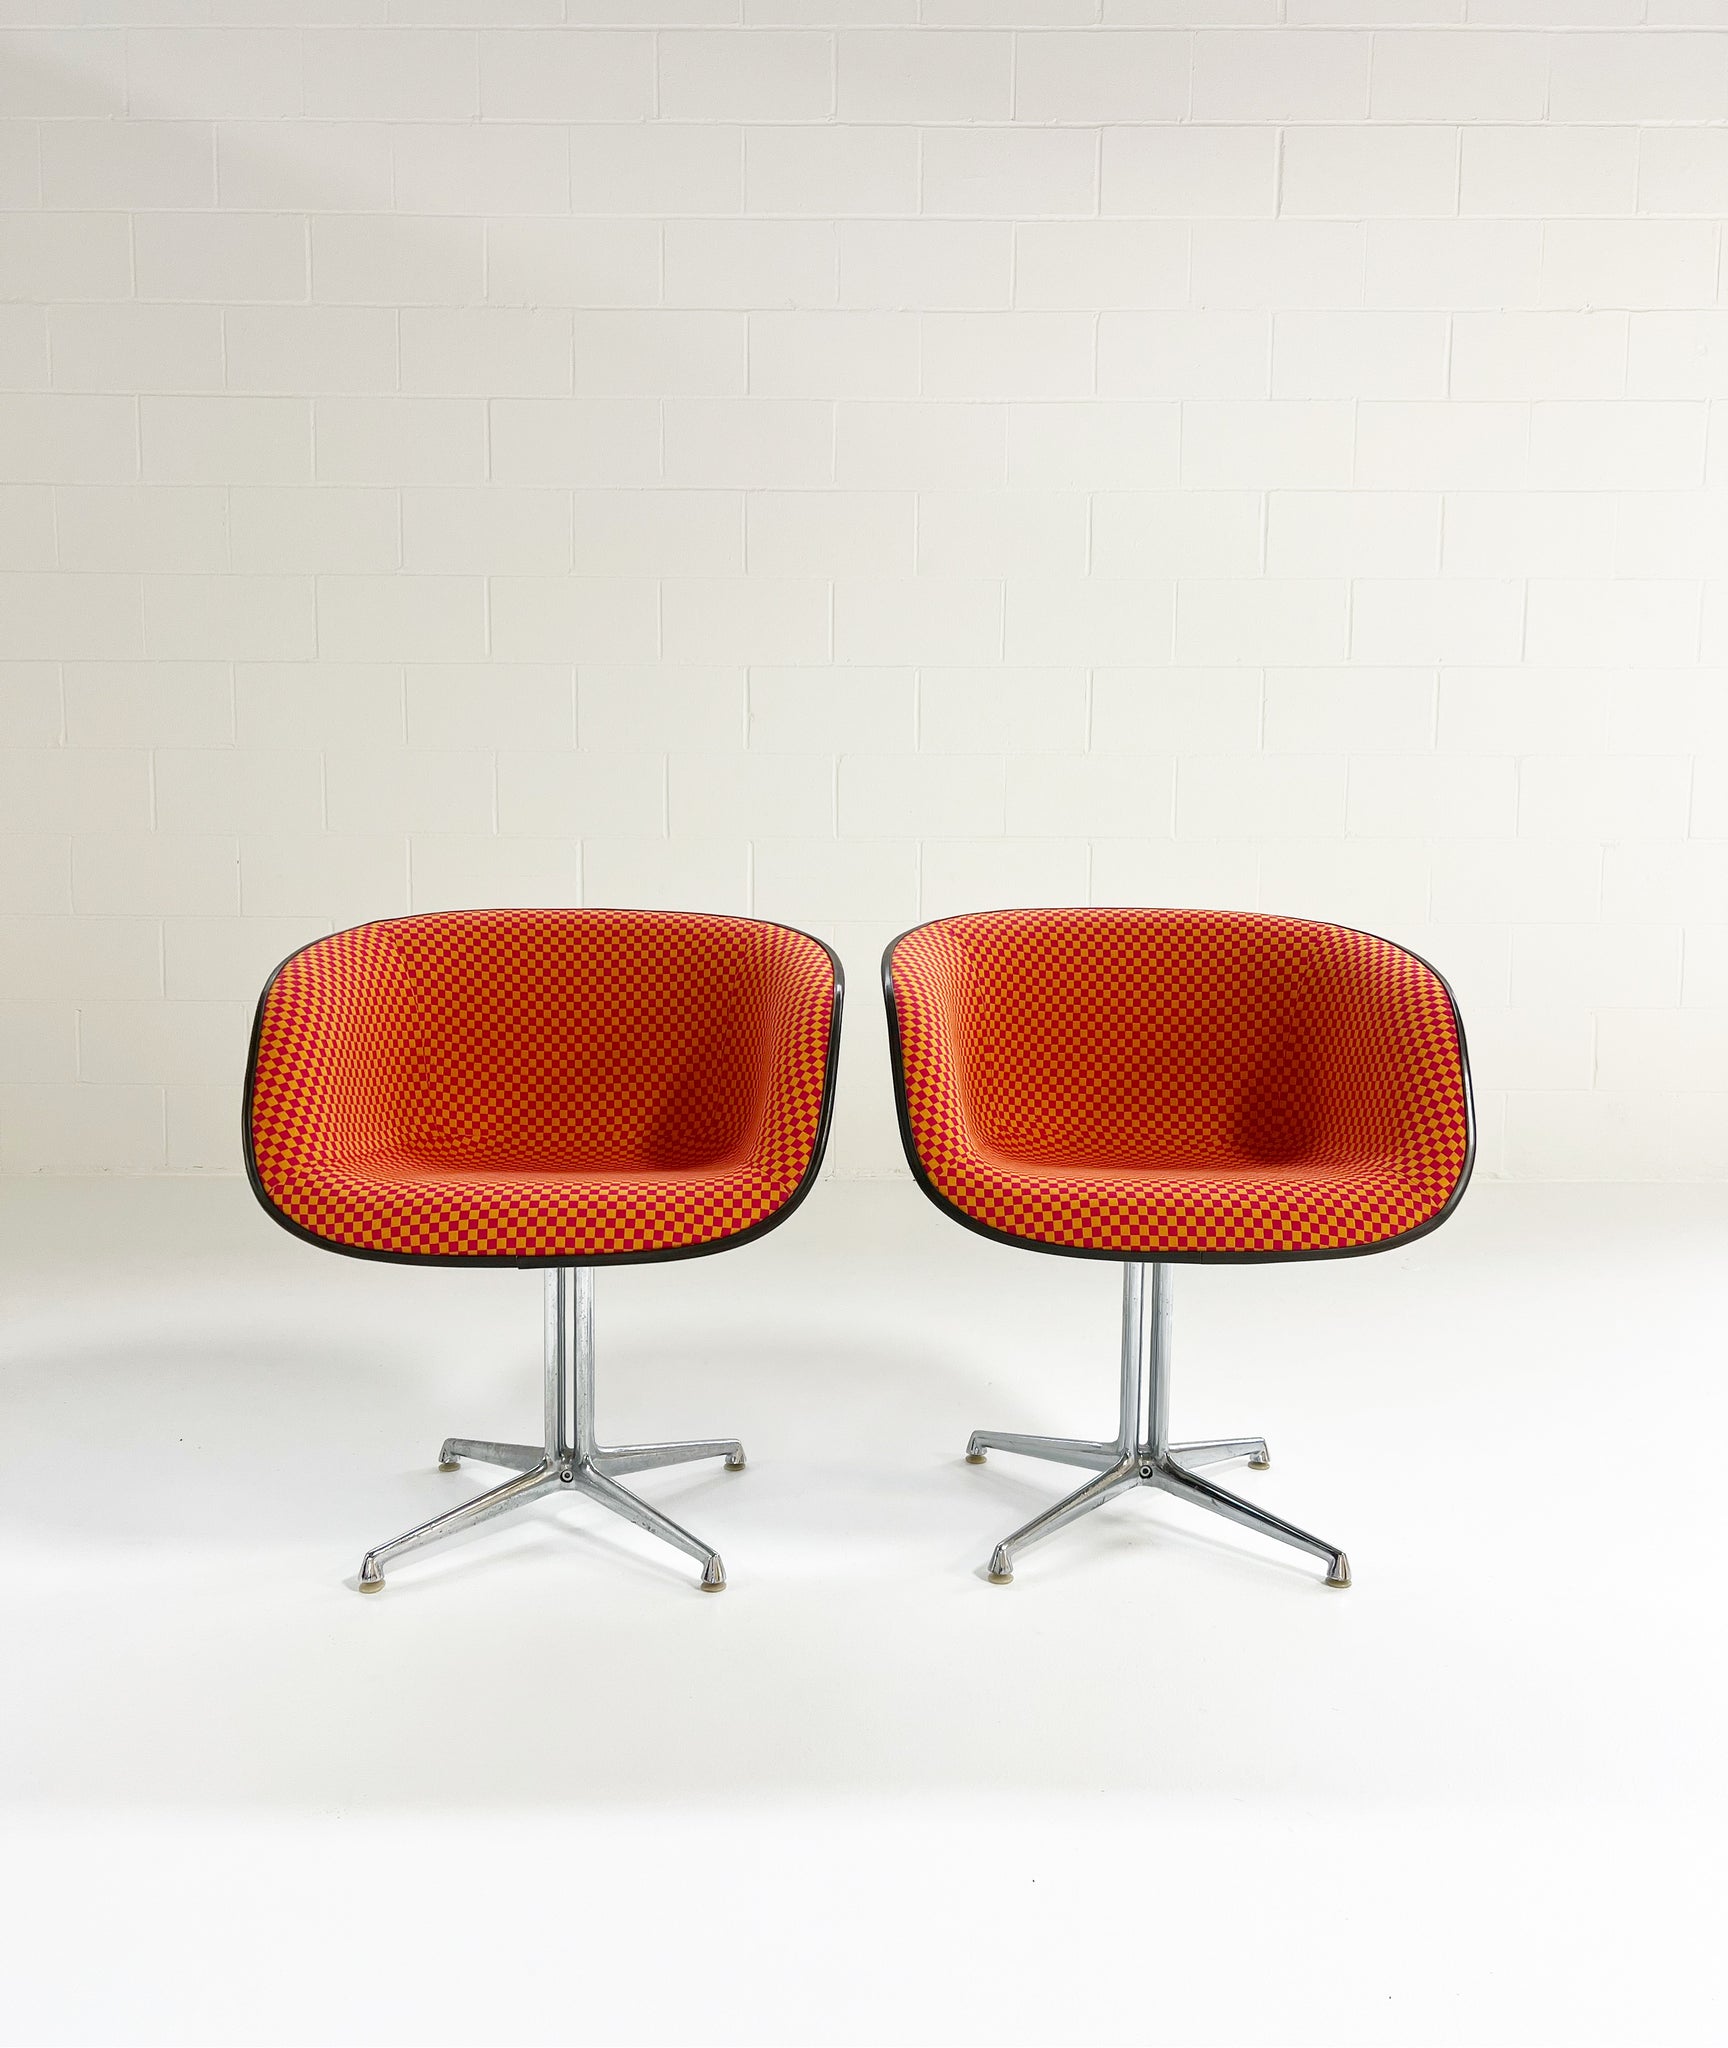 La Fonda Chairs in Alexander Girard Checker Fabric, Pair